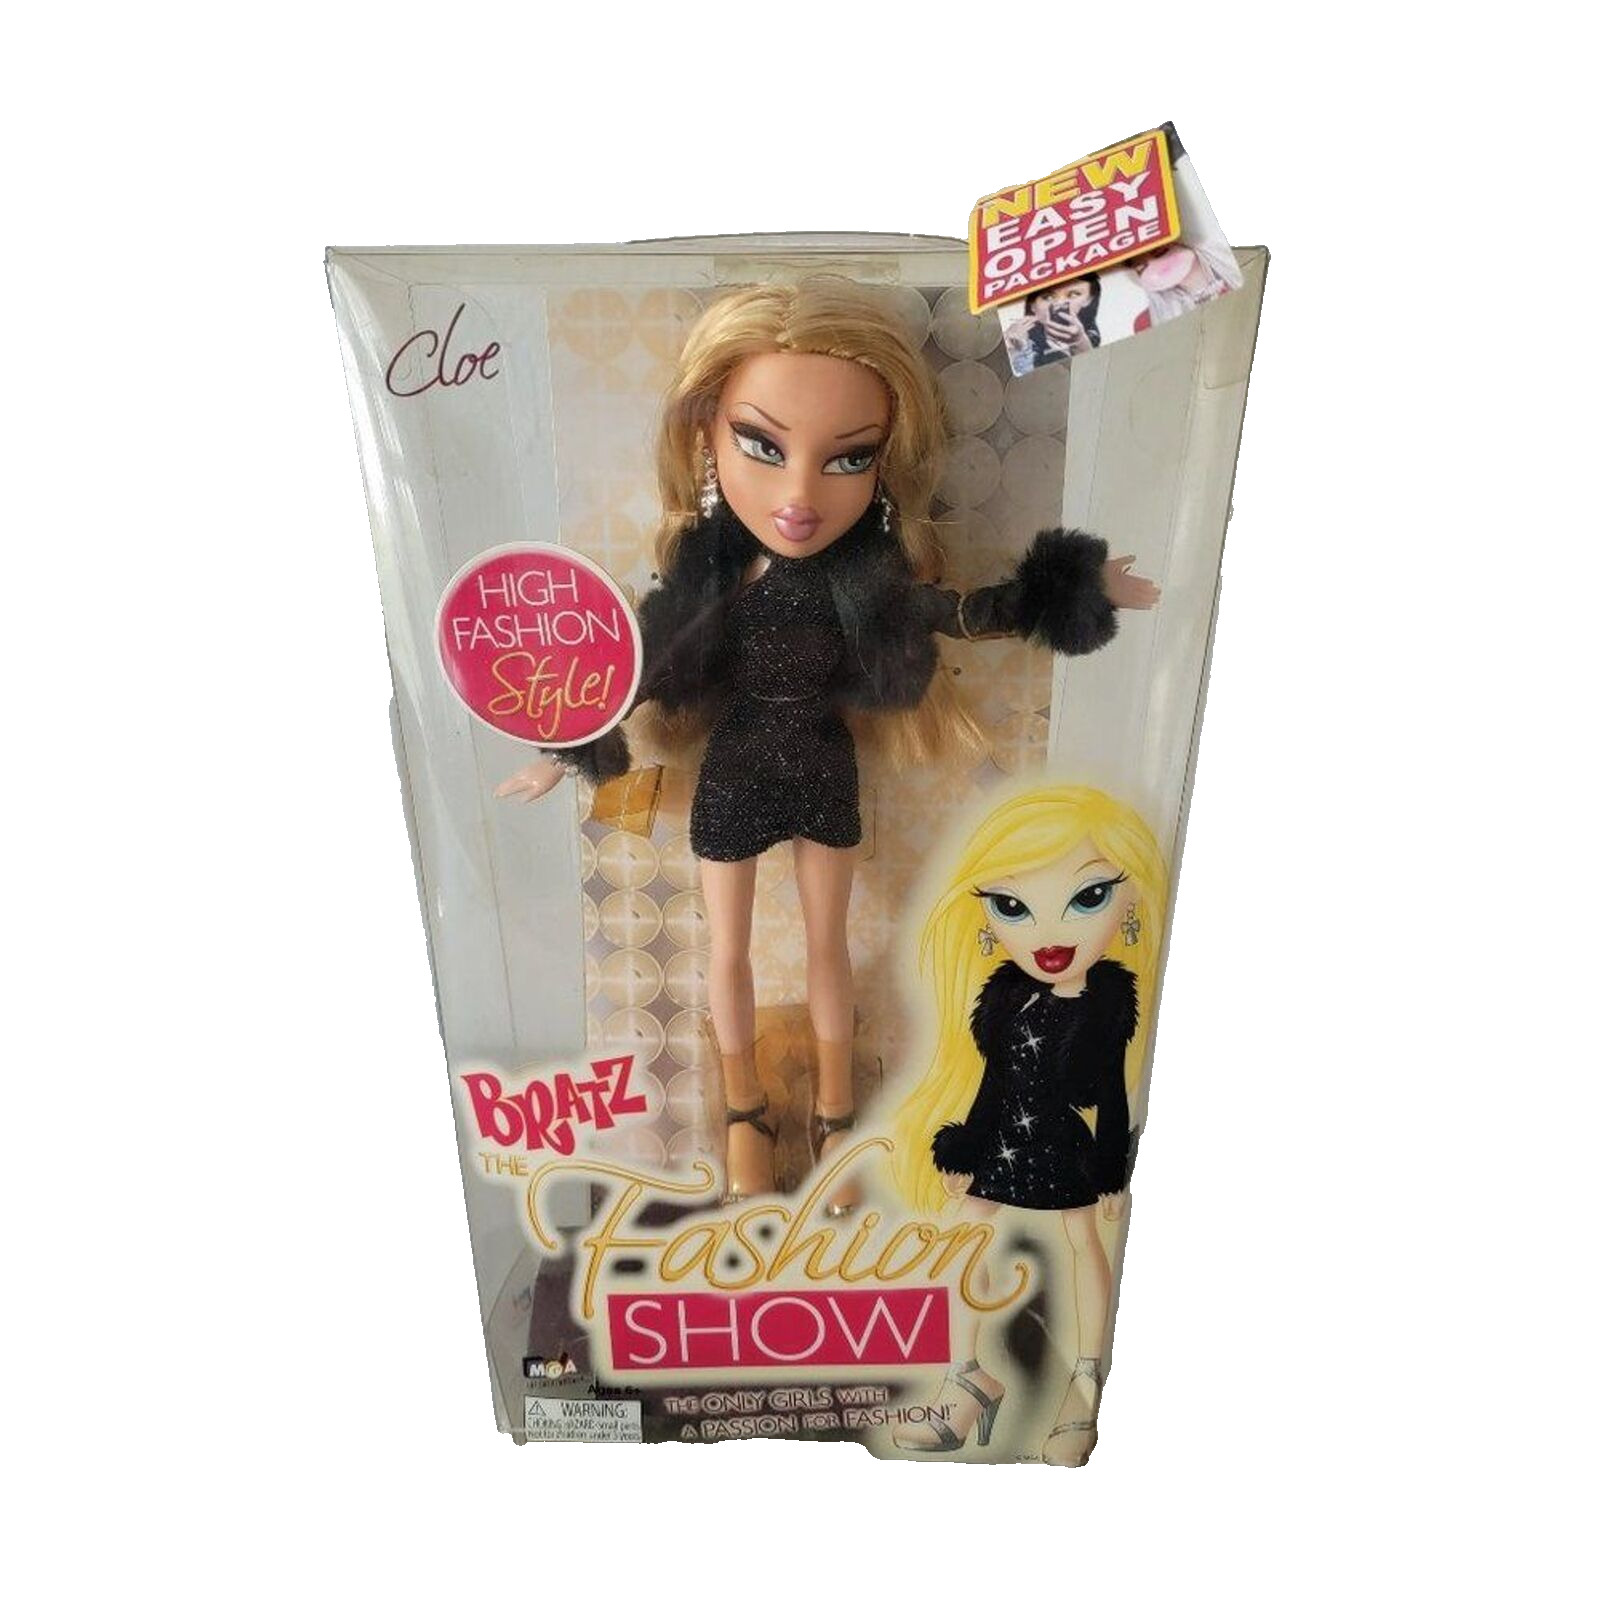 Cloe Bratz The Fashion Show Doll 2008 Collectible NEW Girl Toy Collectible